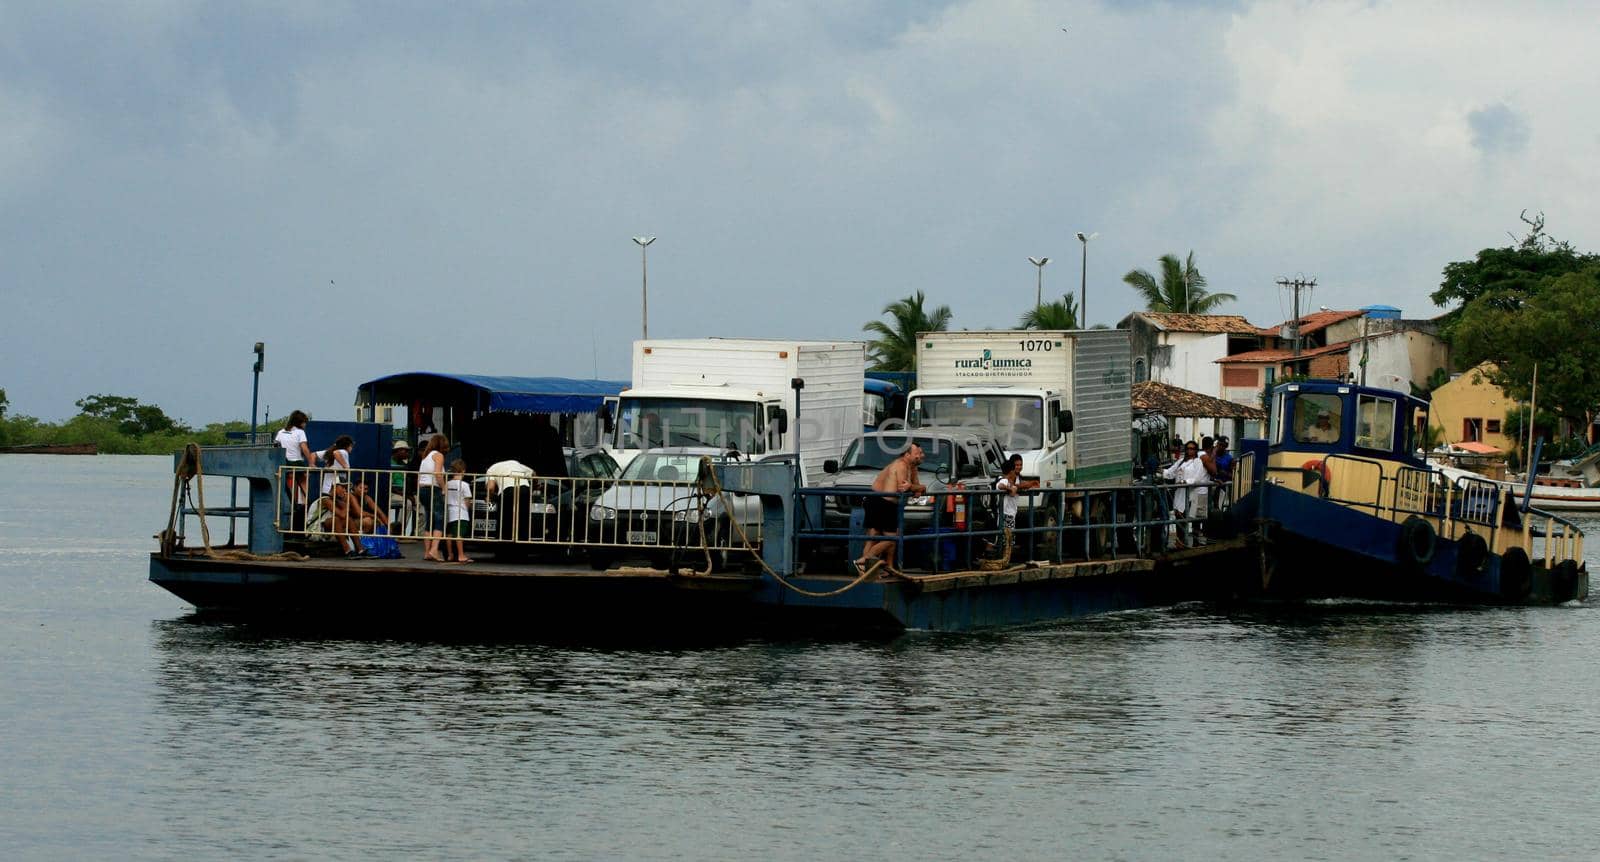 santa cruz cabralia, bahia / brazil - december 6, 2010: Ferry is seen as it crosses vehicles and people across the Joao de Tiba River, between Santa Cruz Cabralia municipality and Santo Andre district.

